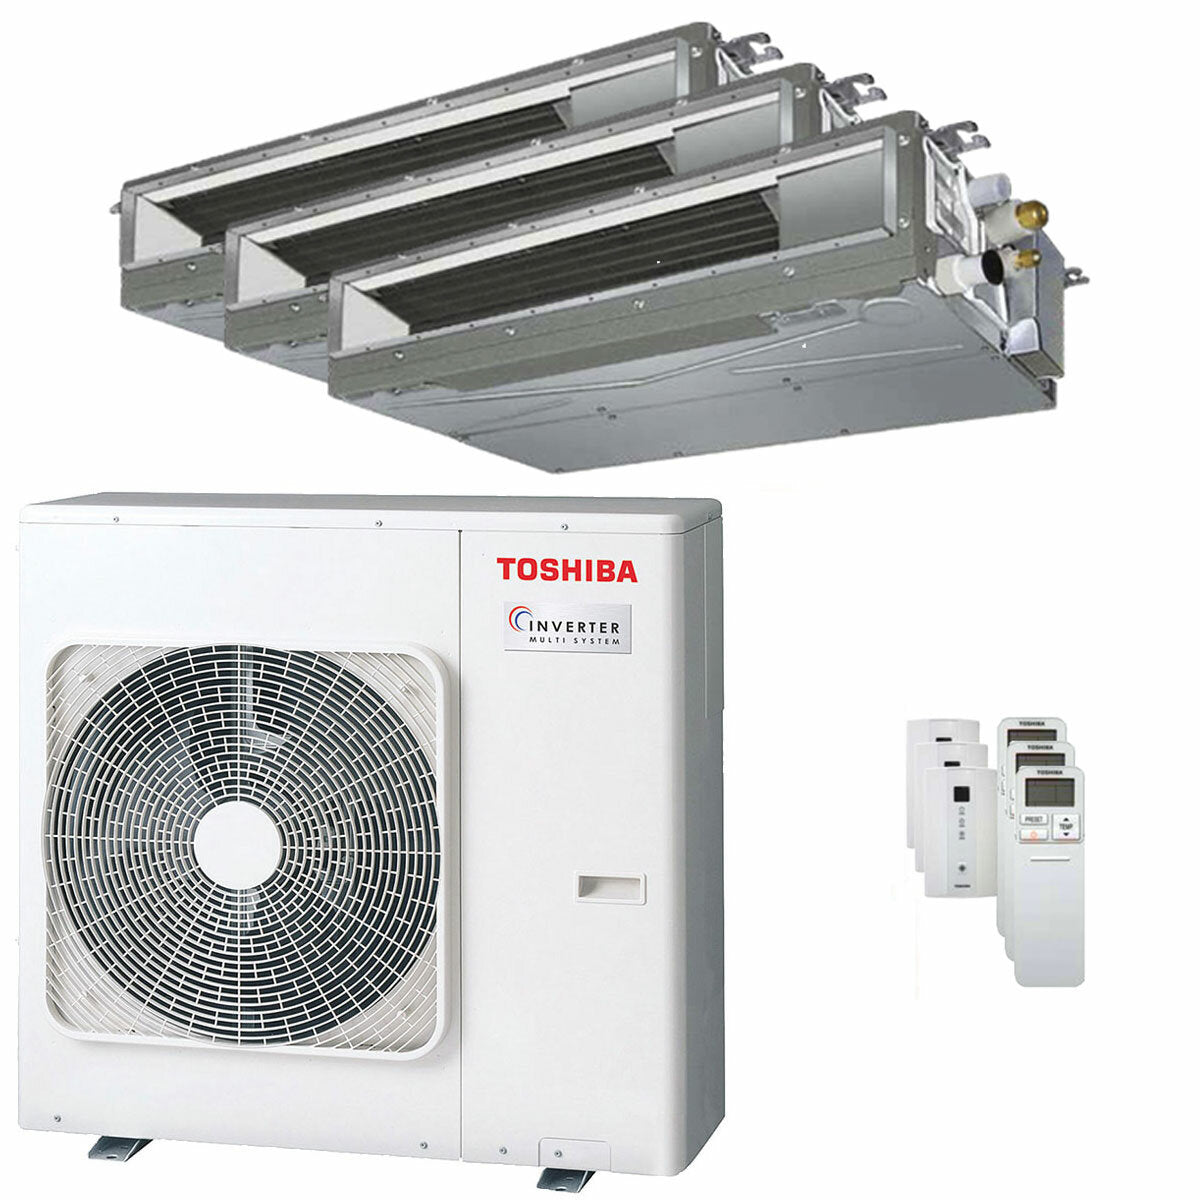 Toshiba ducted air conditioner U2 trial split 9000+12000+12000 BTU inverter A+++ external unit 7 kW